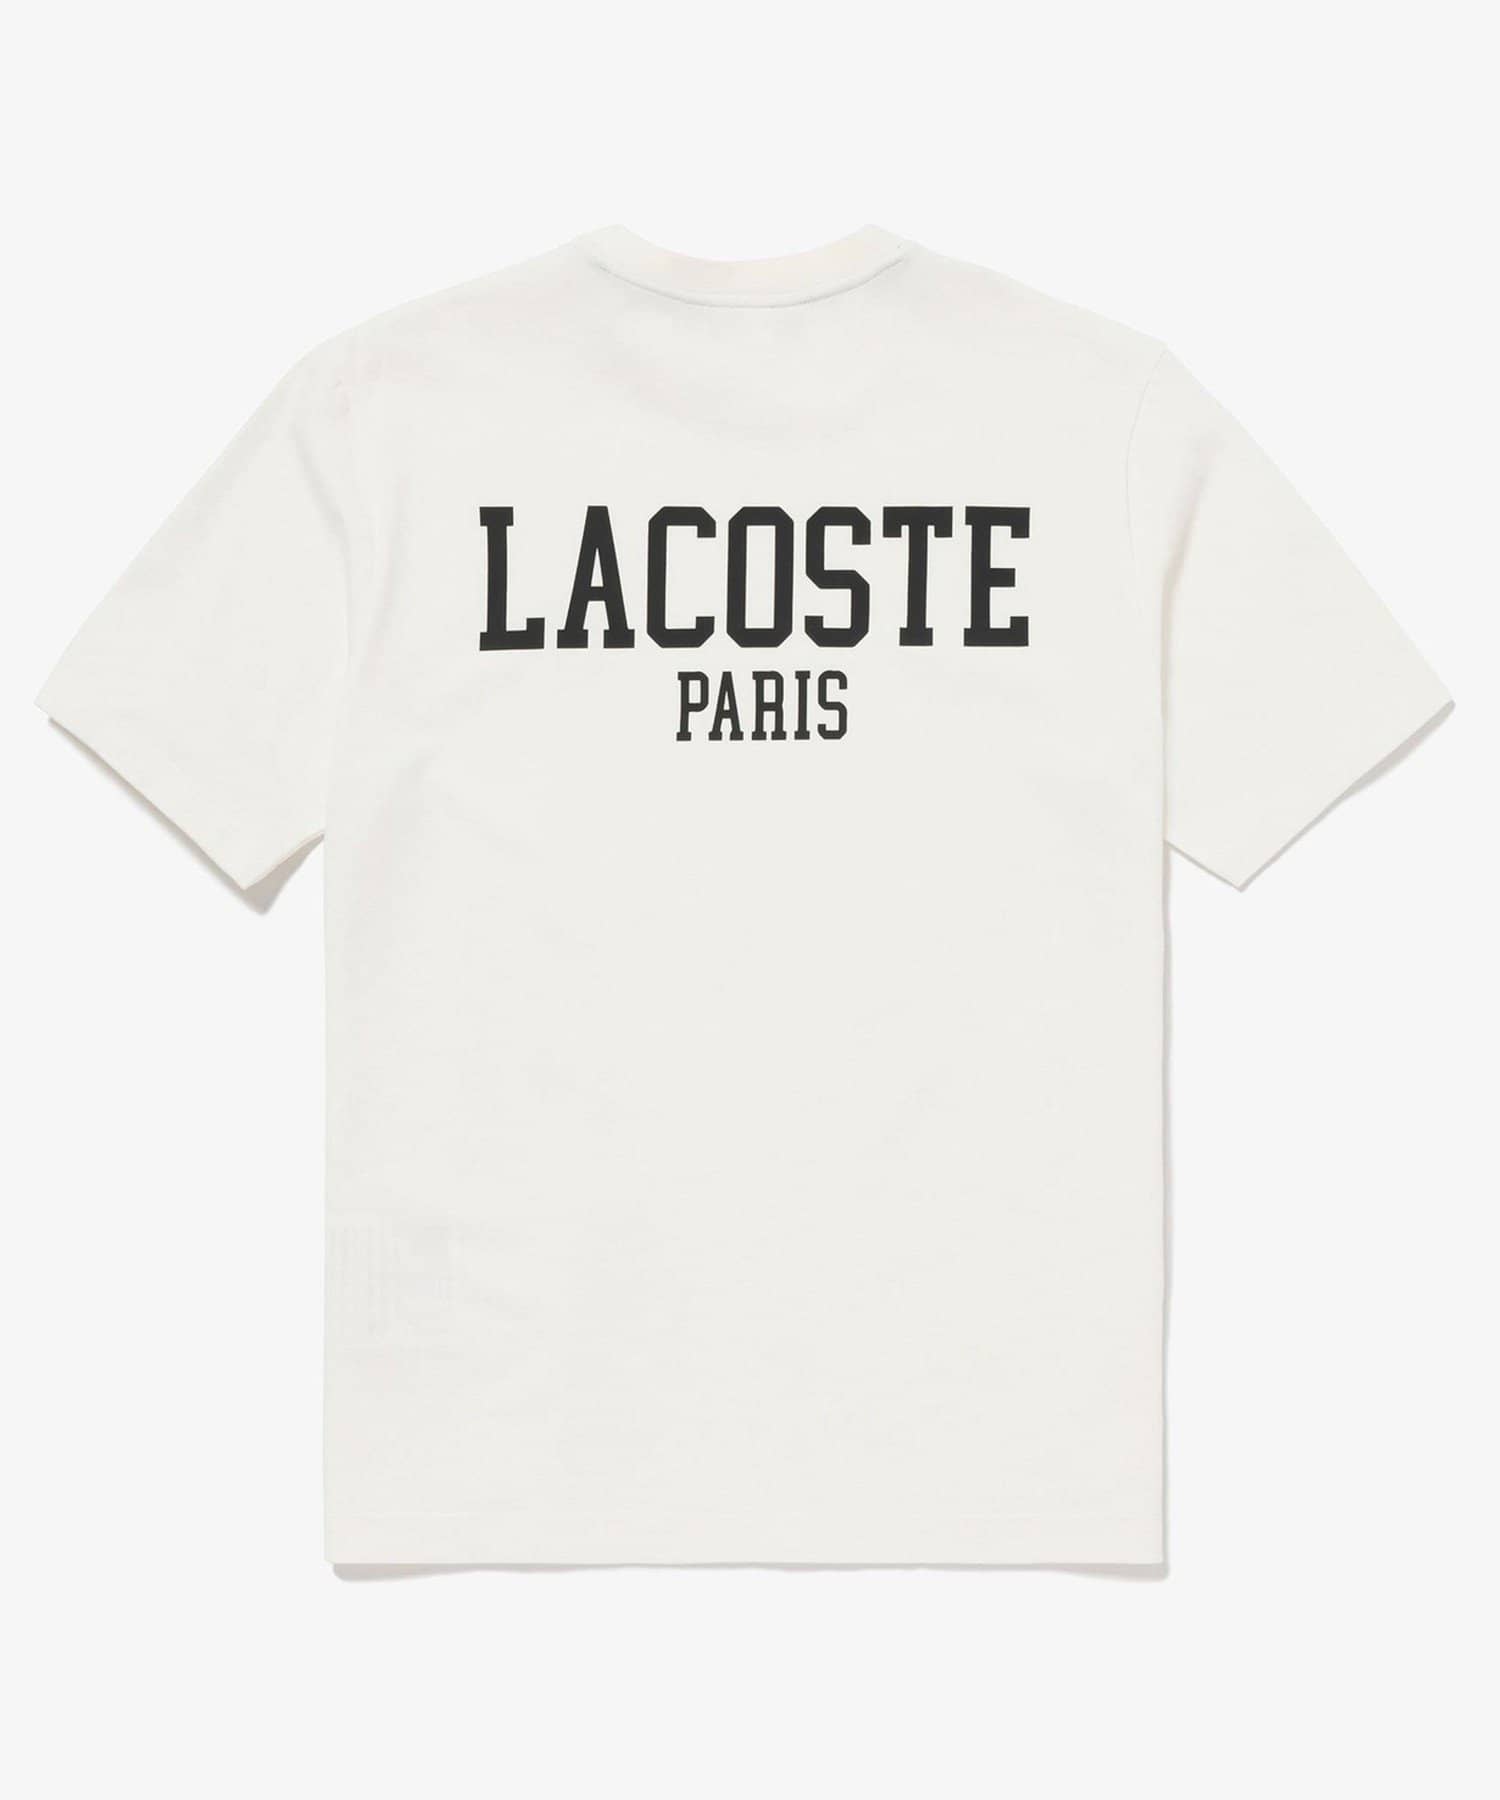 FREDY & GLOSTER(フレディ アンド グロスター) 【LACOSTE】バックプリント クルーネックTシャツ ワンポイントロゴ